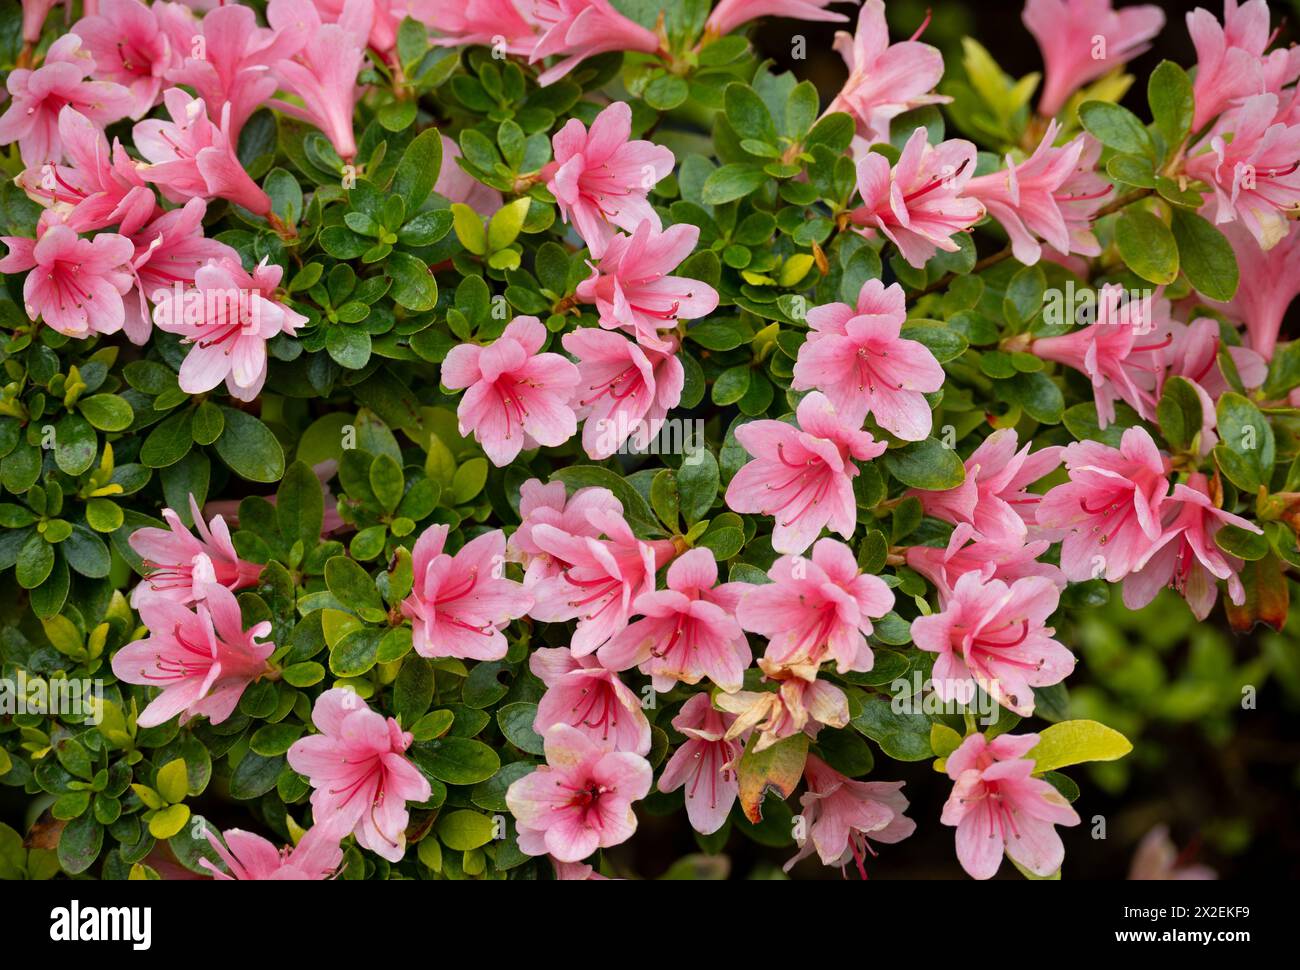 Rhododendron 'Kirin' Stock Photo